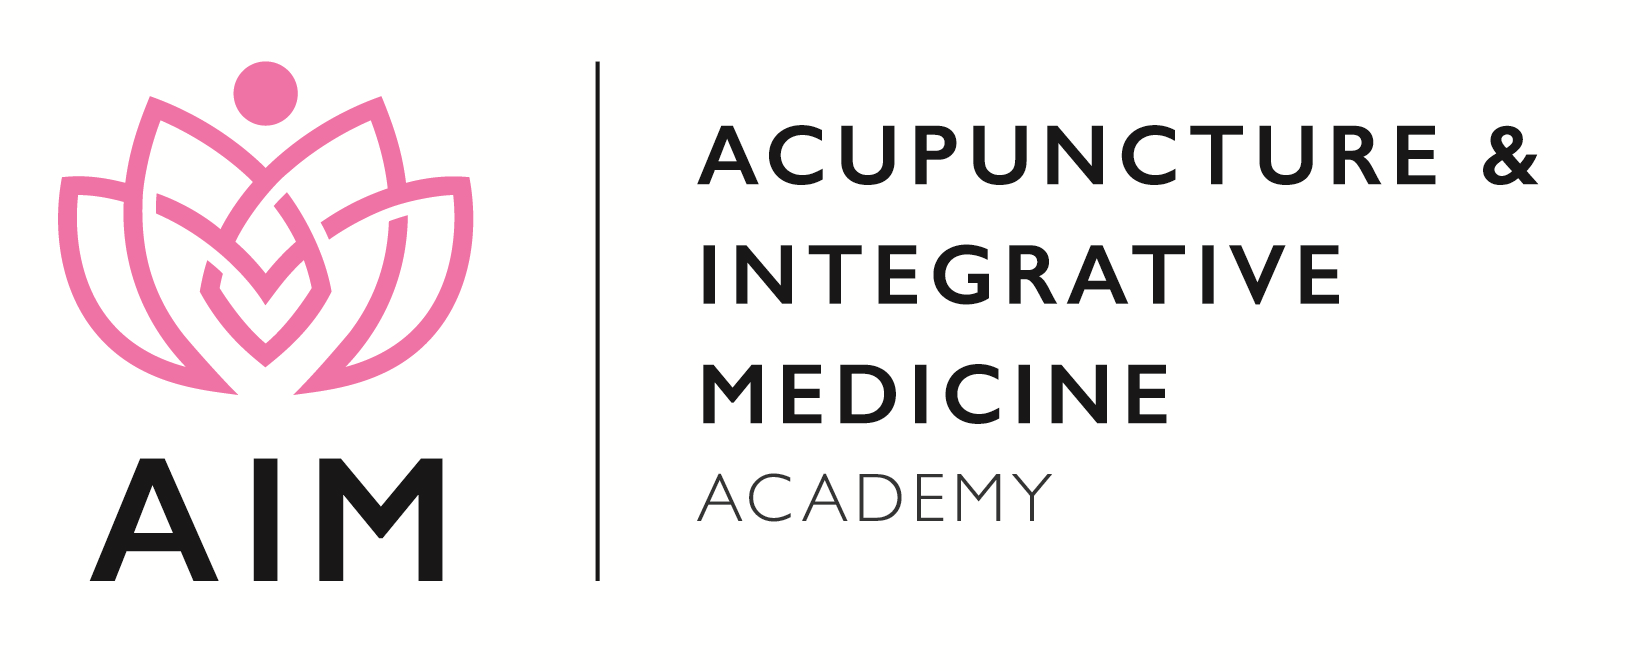 AIM Academy - Acupuncture and Integrative Medicine Academy